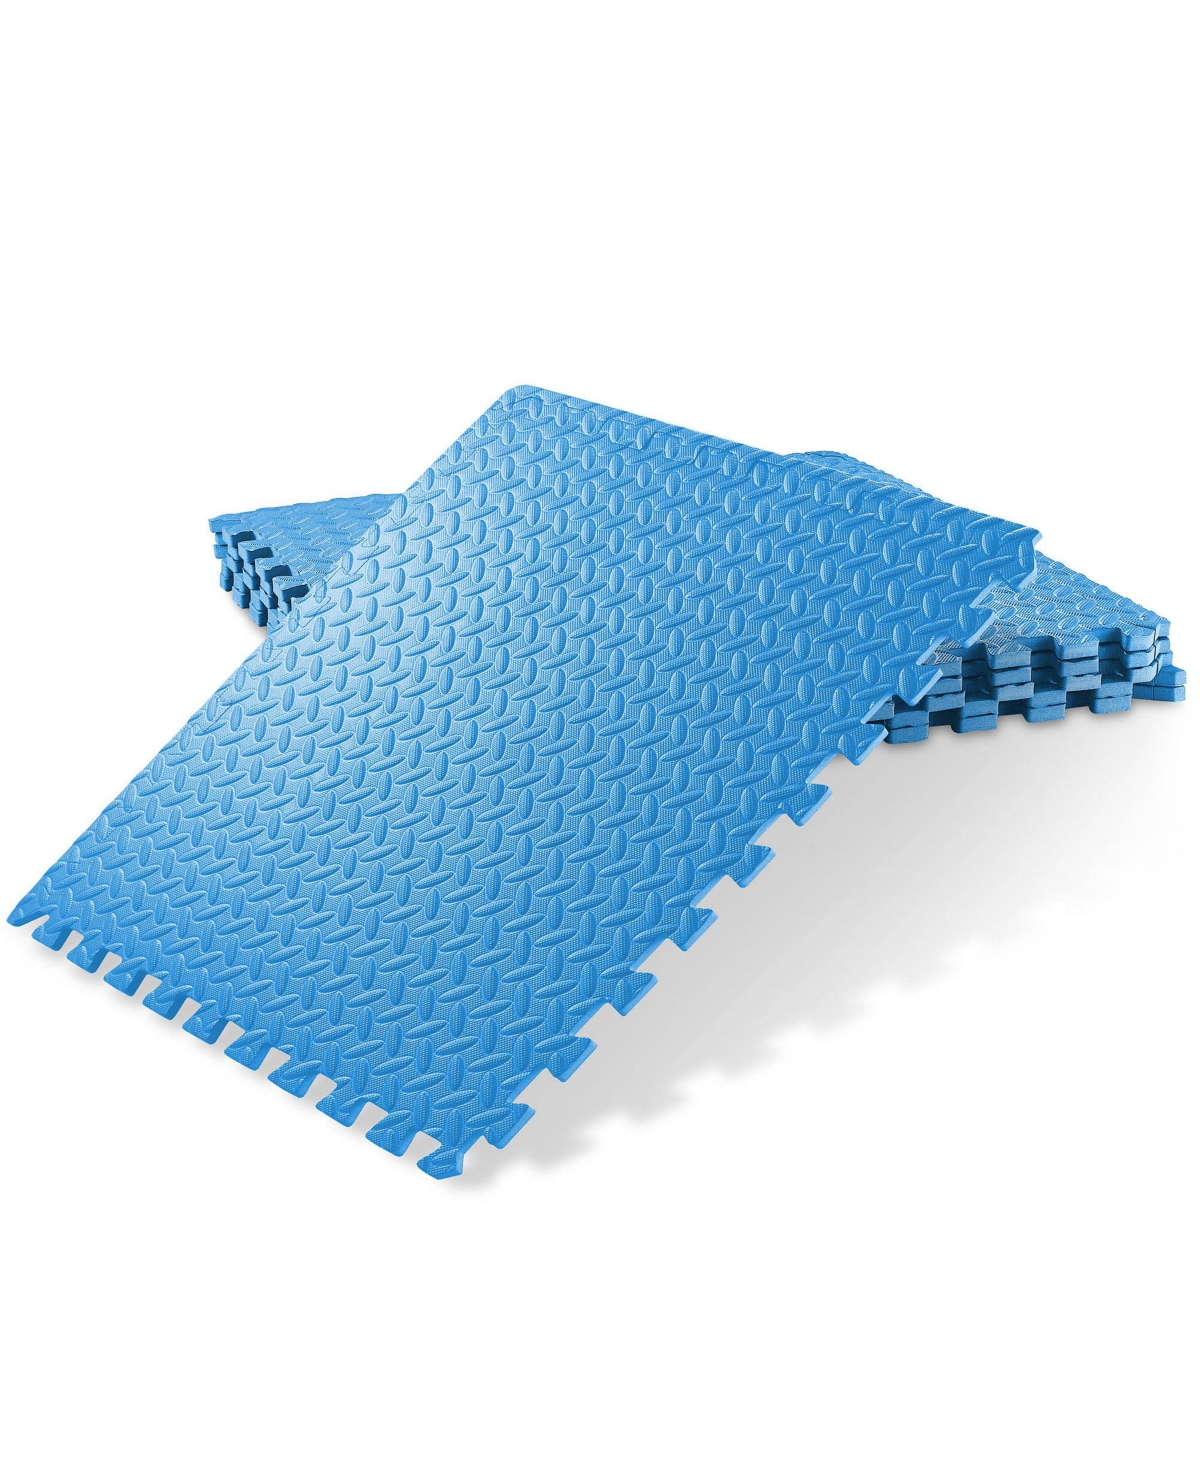 Pack of 6 Exercise Flooring Mats - 24 x 24 Inch Foam Rubber Interlocking Puzzle Floor Tiles - Blue - Blue